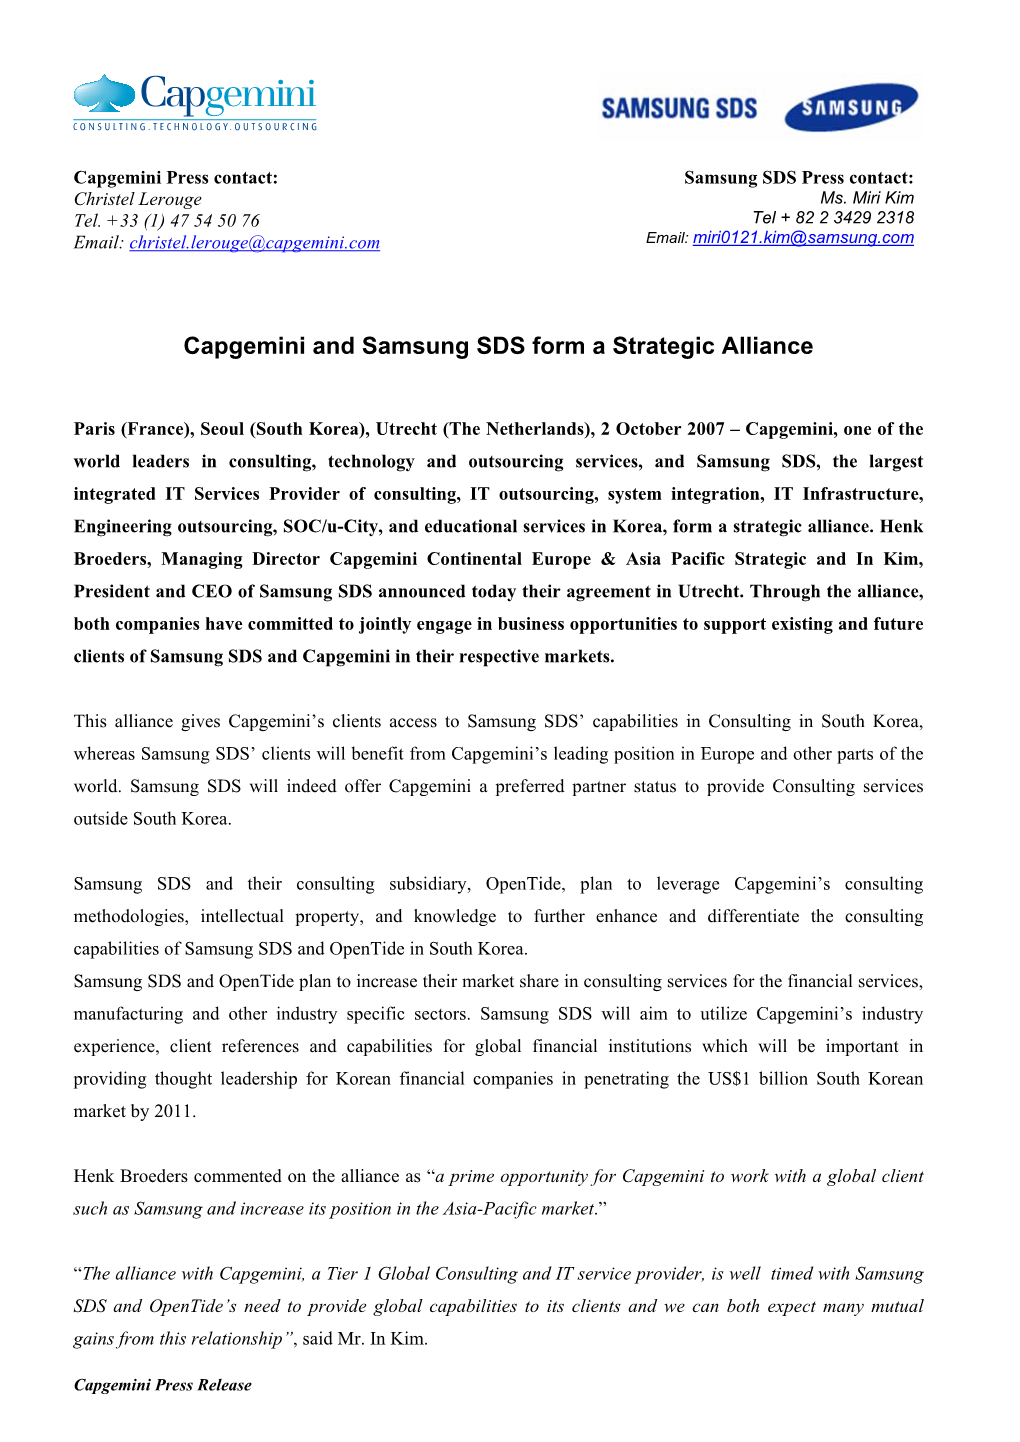 Capgemini and Samsung SDS Form a Strategic Alliance